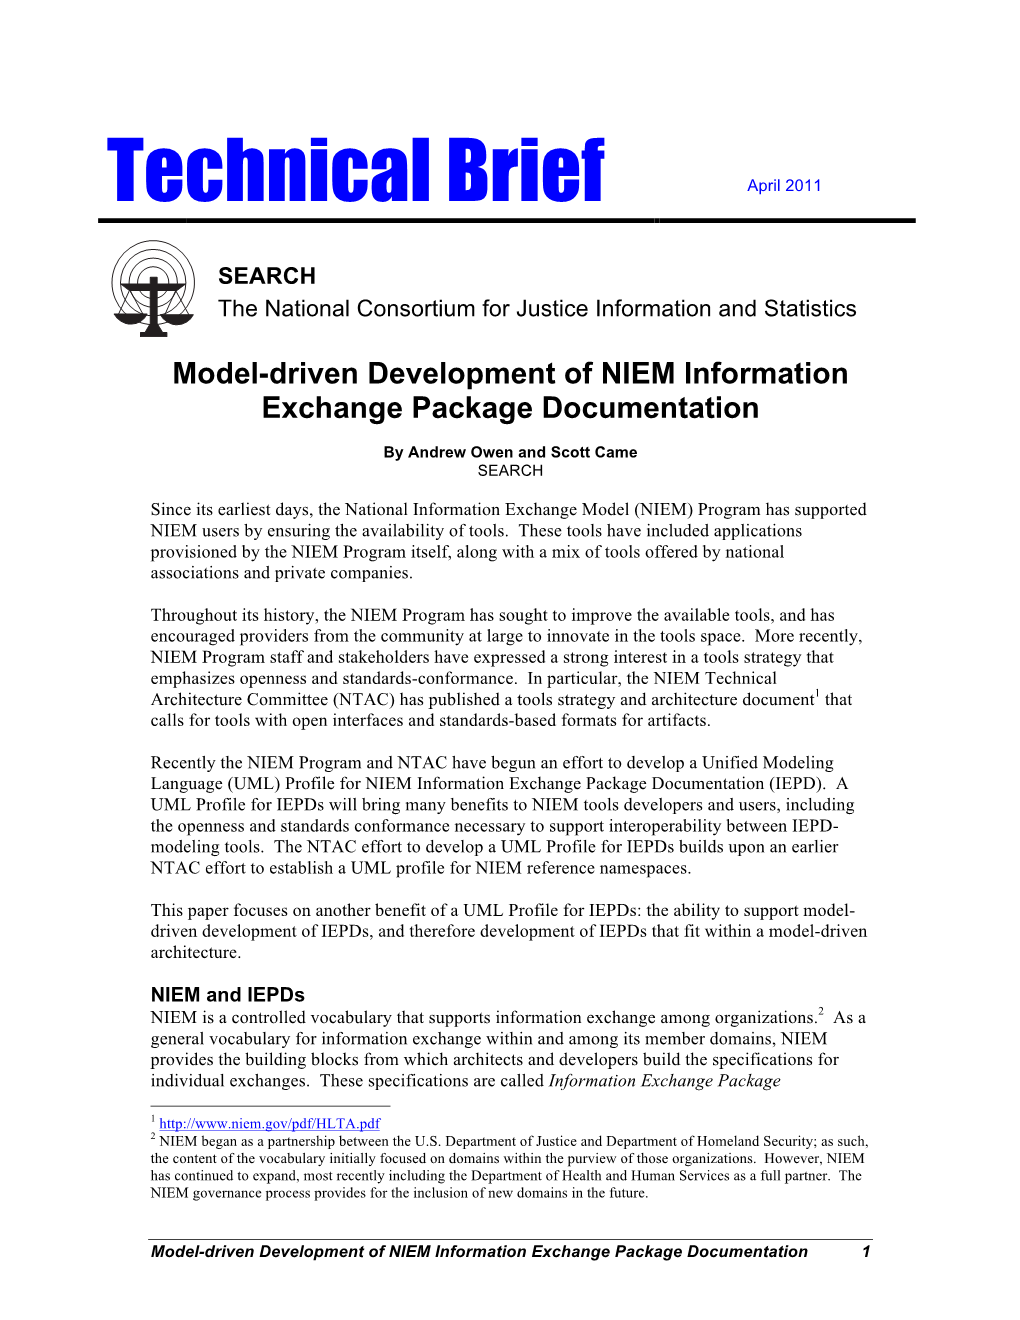 Technical Brief-Model-Driven Development of NIEM Information